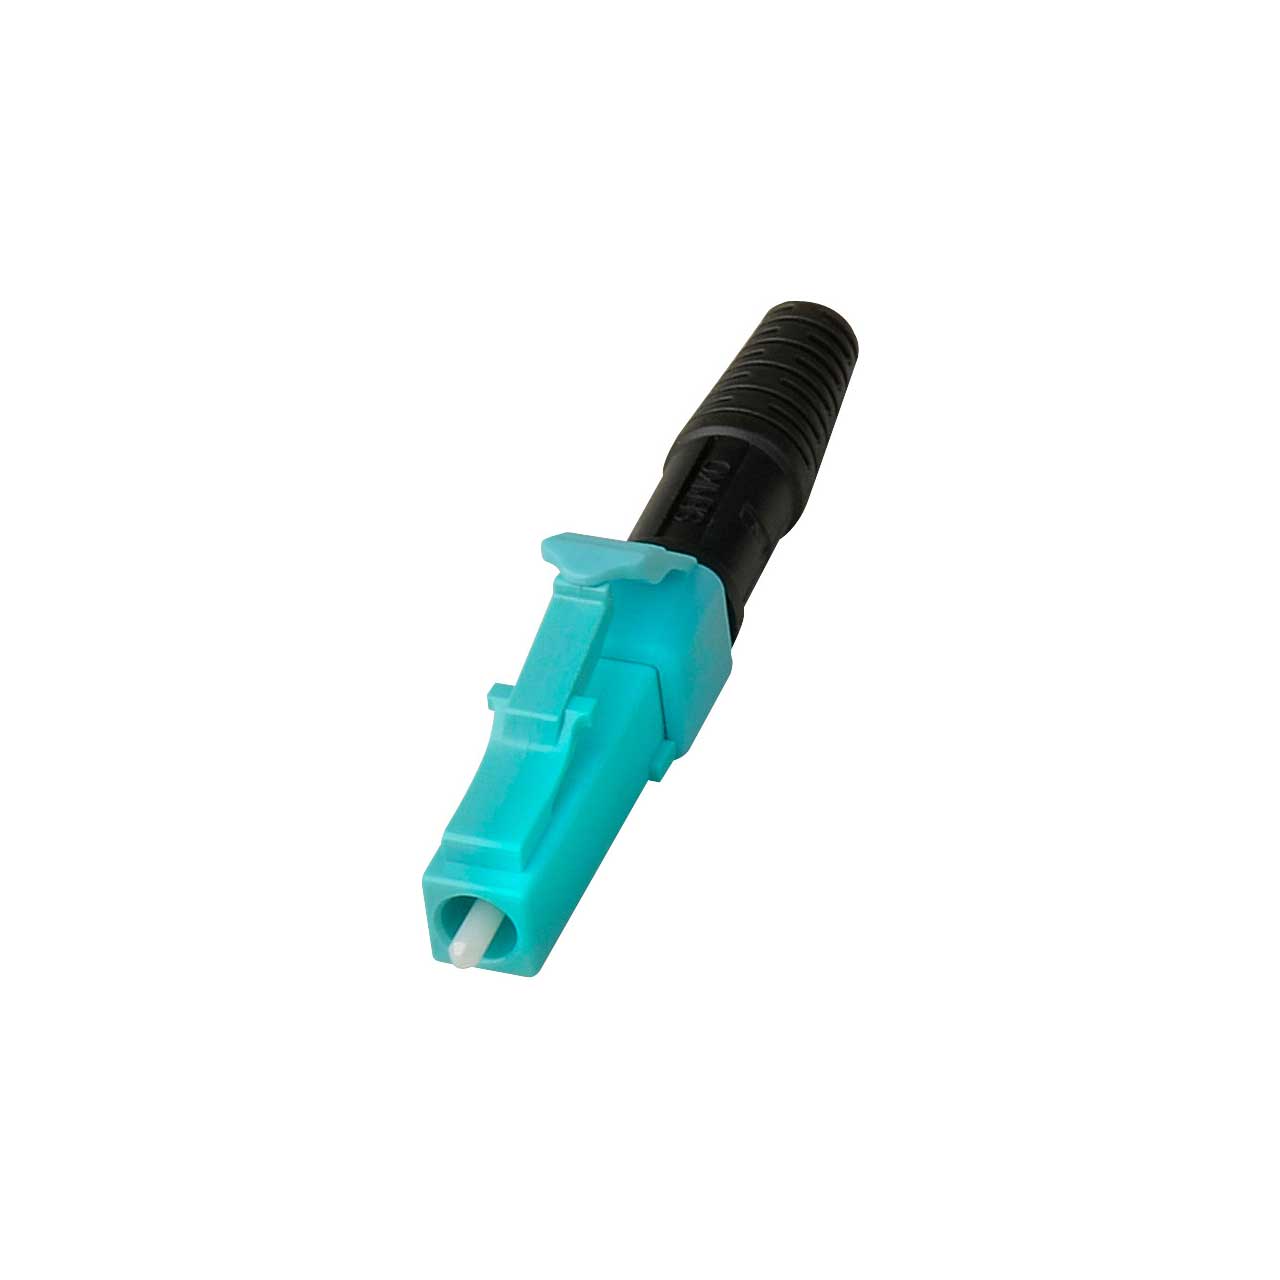 Senko Premium Lc Sx 127um Om3 Aqua Fiber Connector With 3mm Mini Boot Black Pot Polish Style